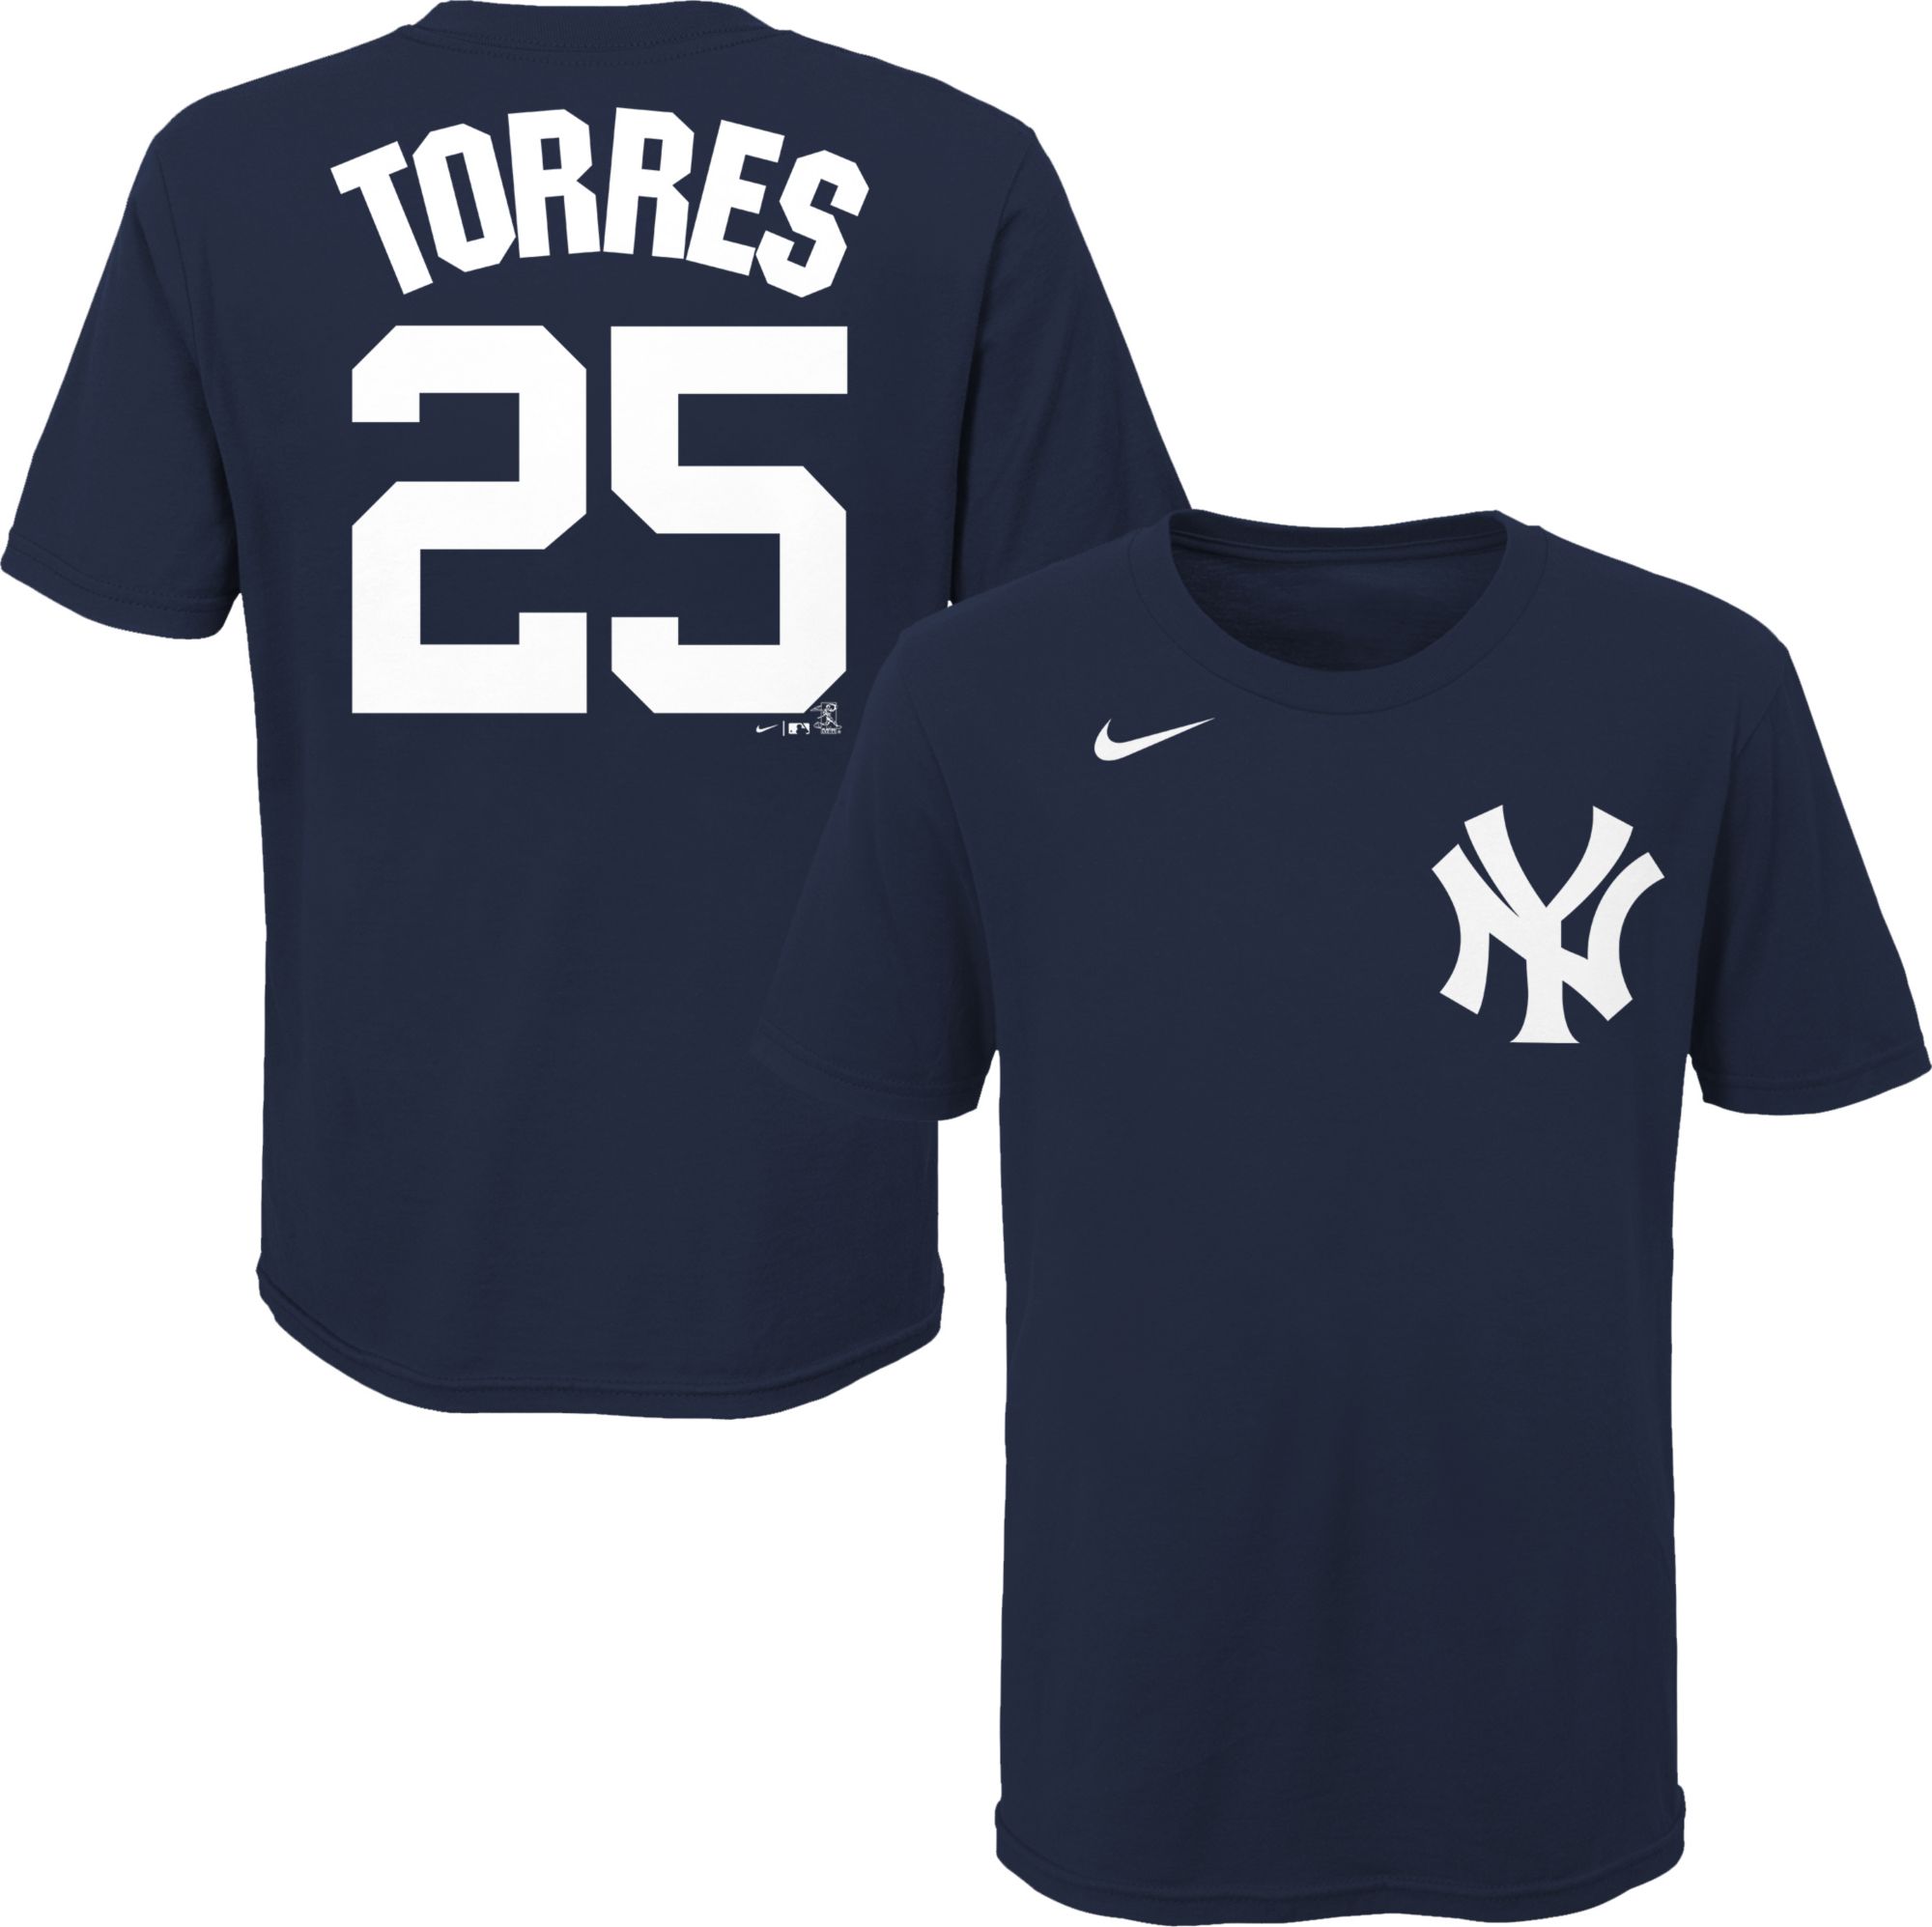 Eletees Giancarlo Stanton New York Yankees 400 Career Home Runs Signature Shirt